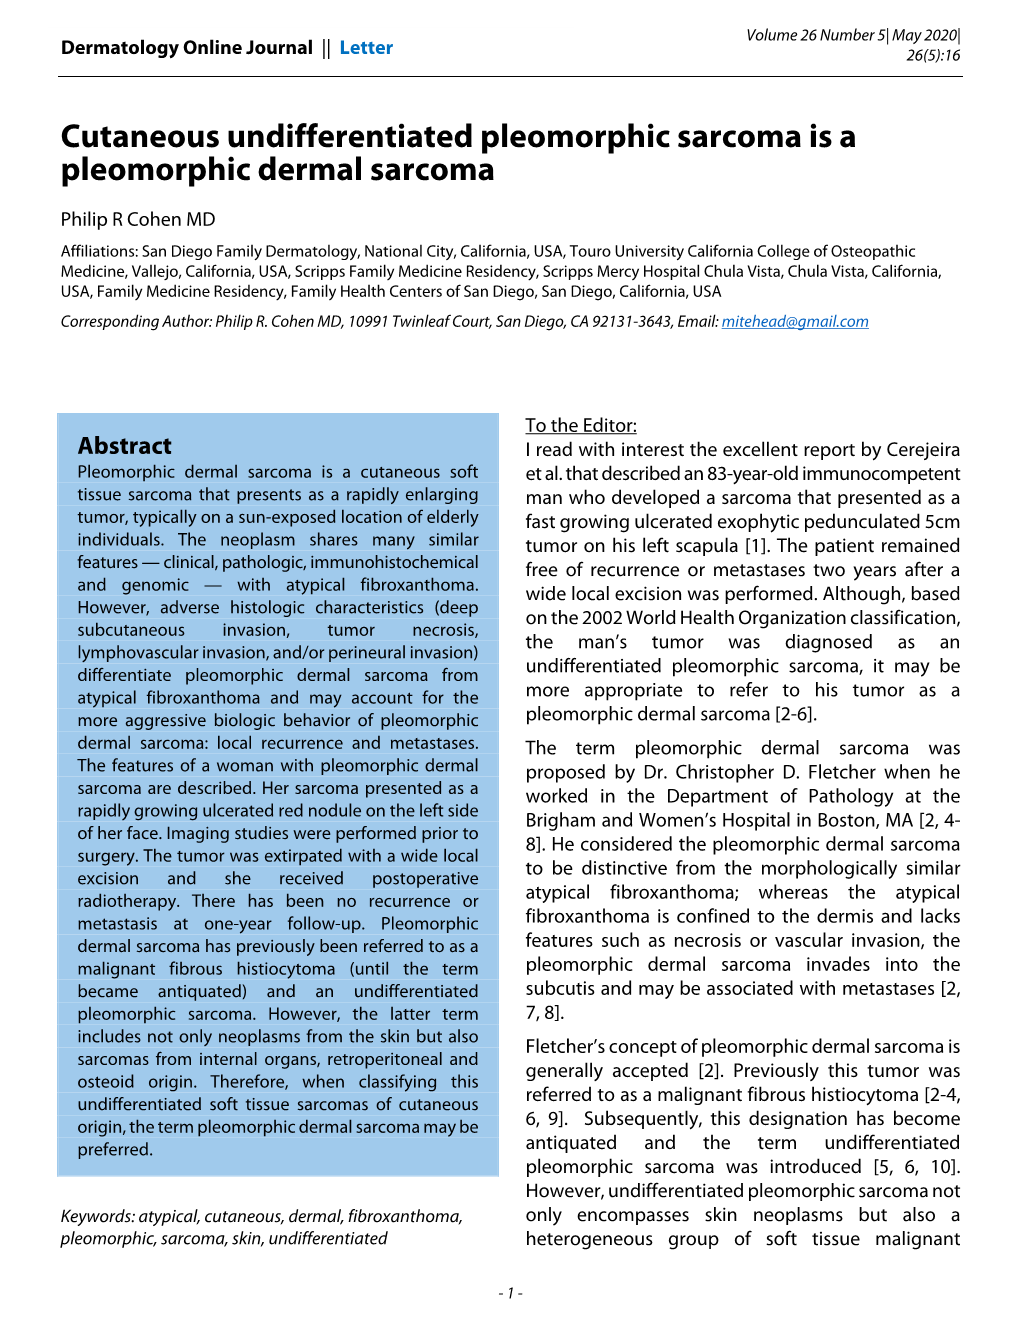 Cutaneous Undifferentiated Pleomorphic Sarcoma Is a Pleomorphic Dermal Sarcoma